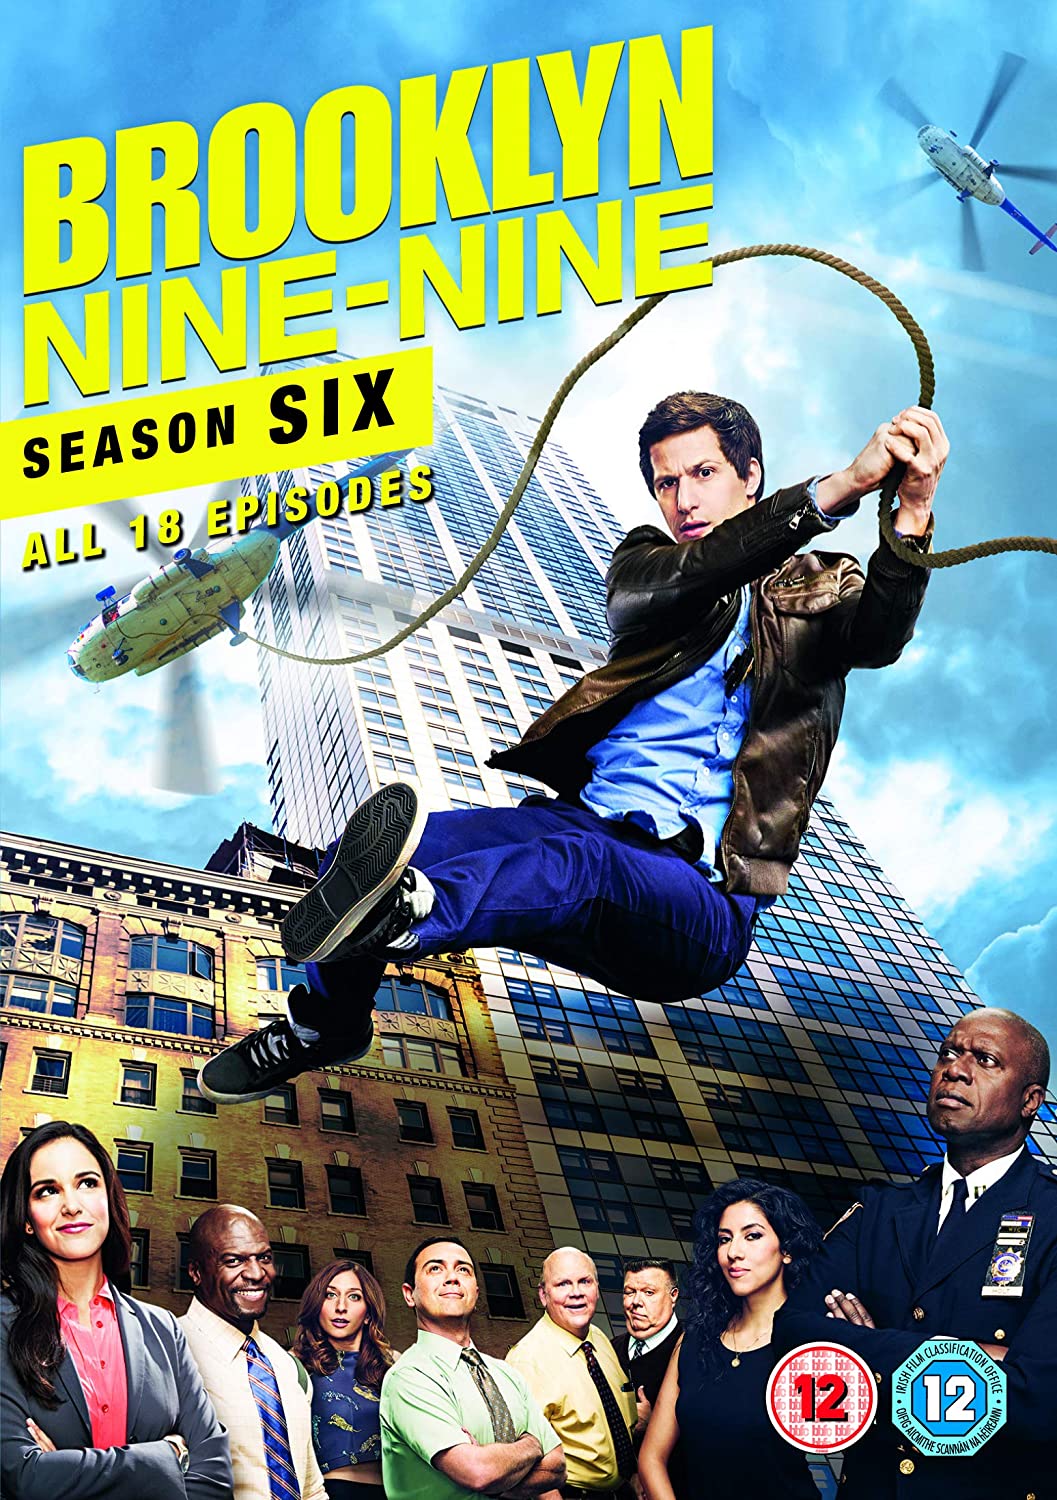 Brooklyn Nine-Nine: Season 6 (DVD)